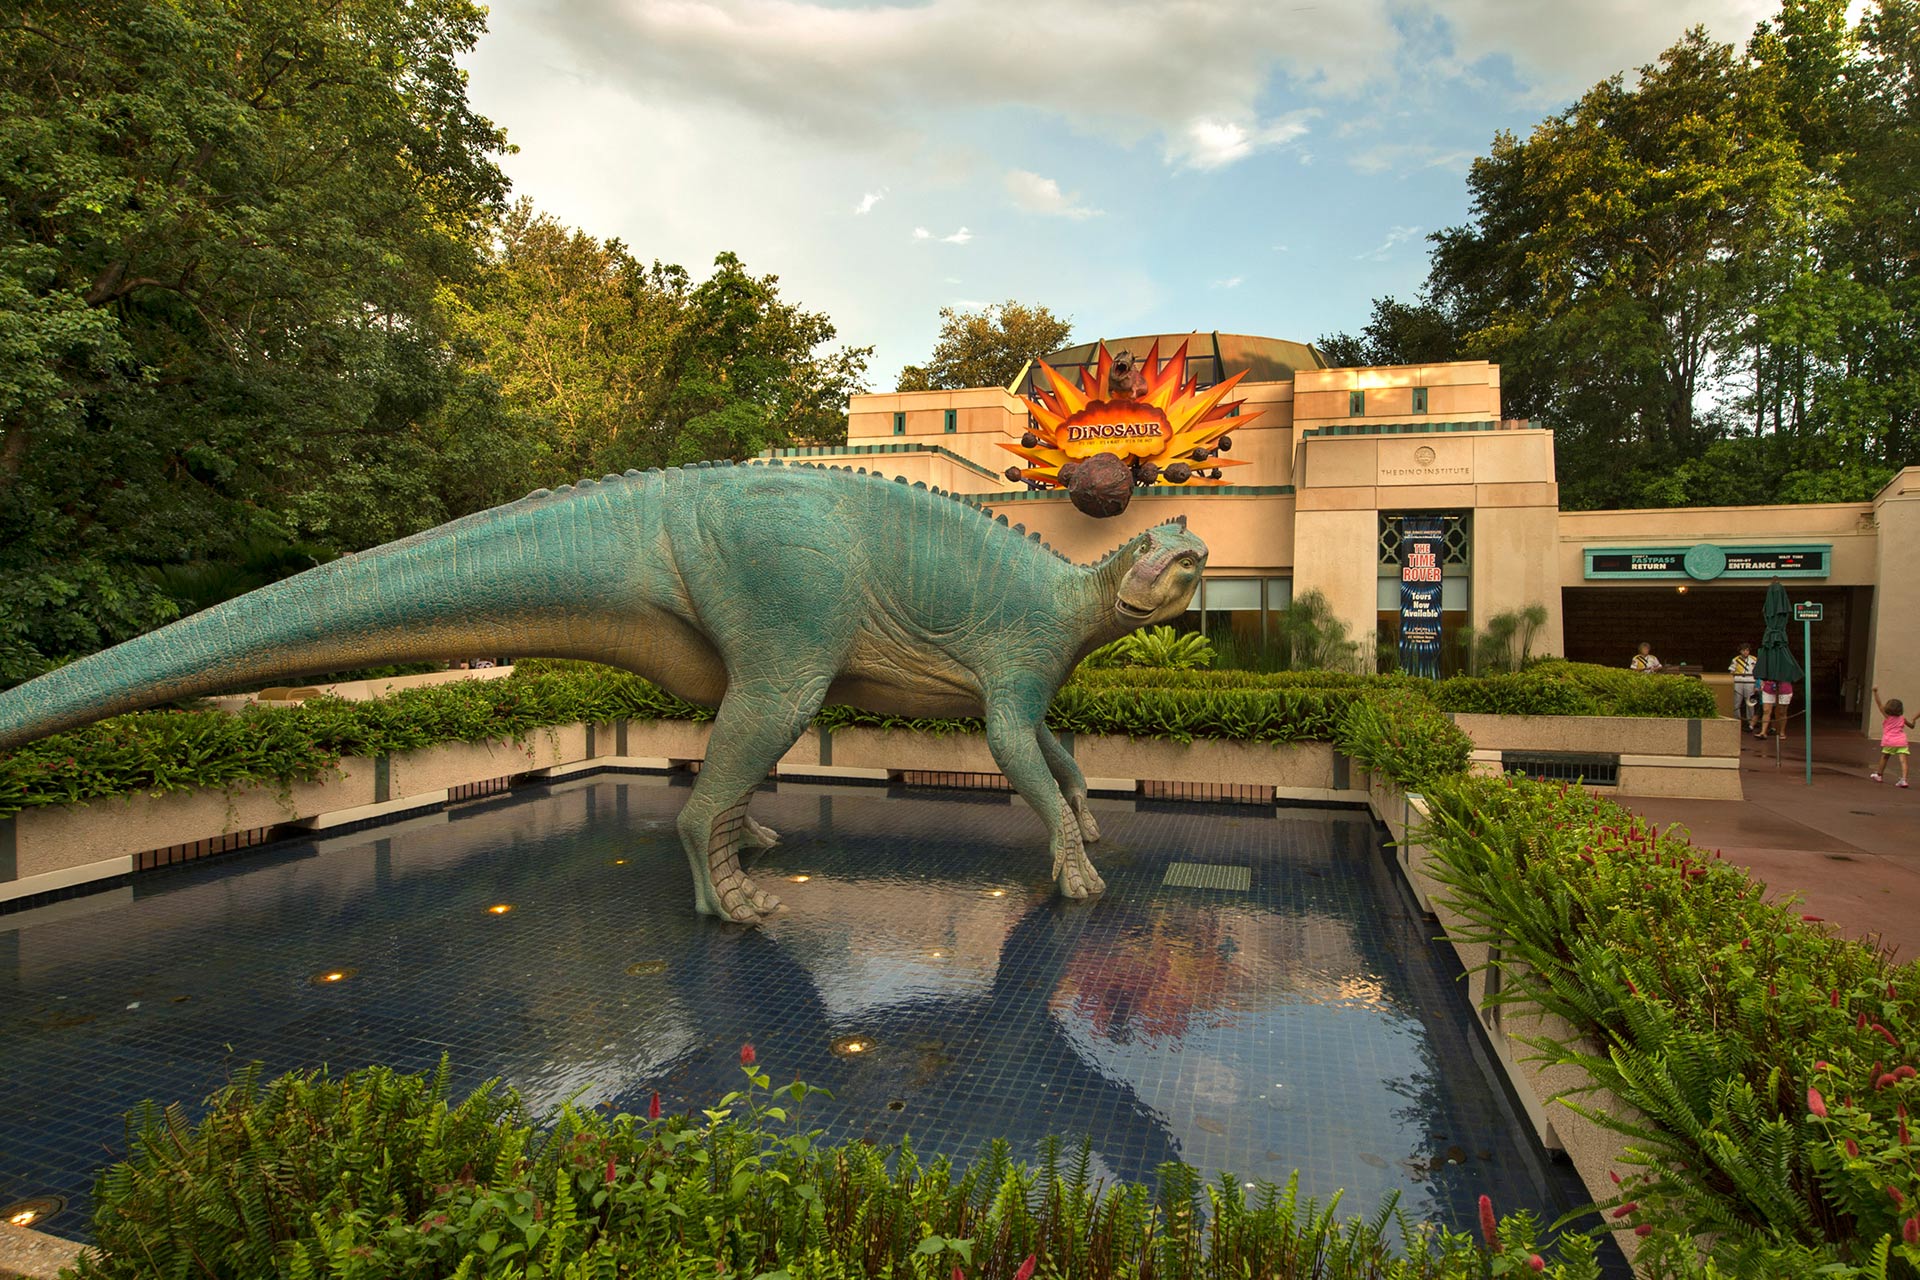 Dinoland in Animal Kingdom Park at Disney